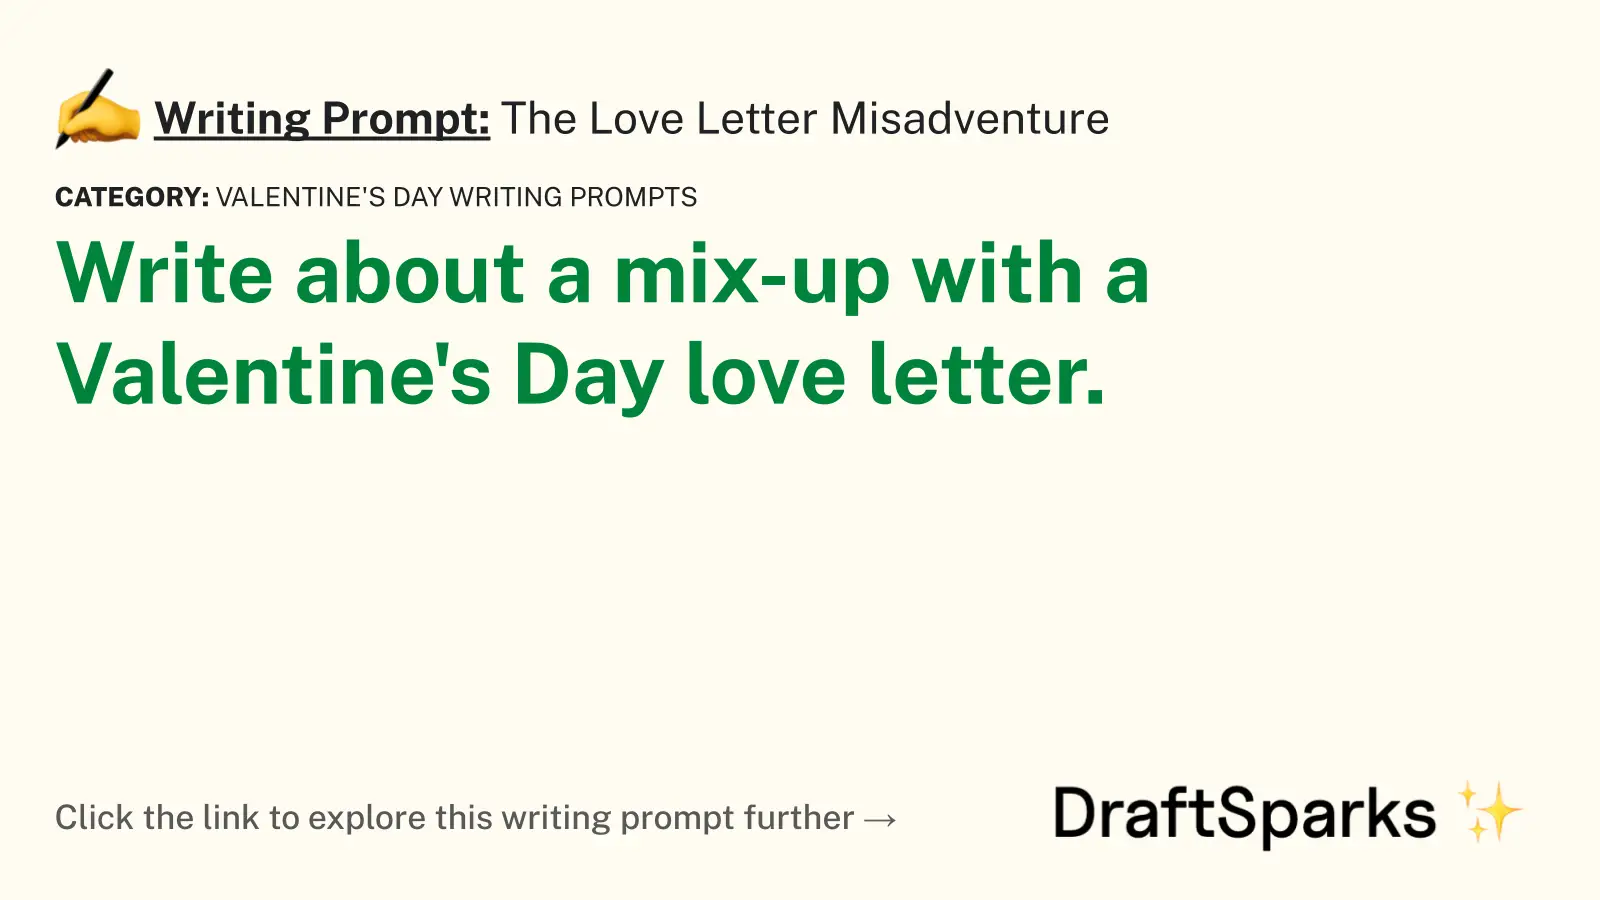 The Love Letter Misadventure